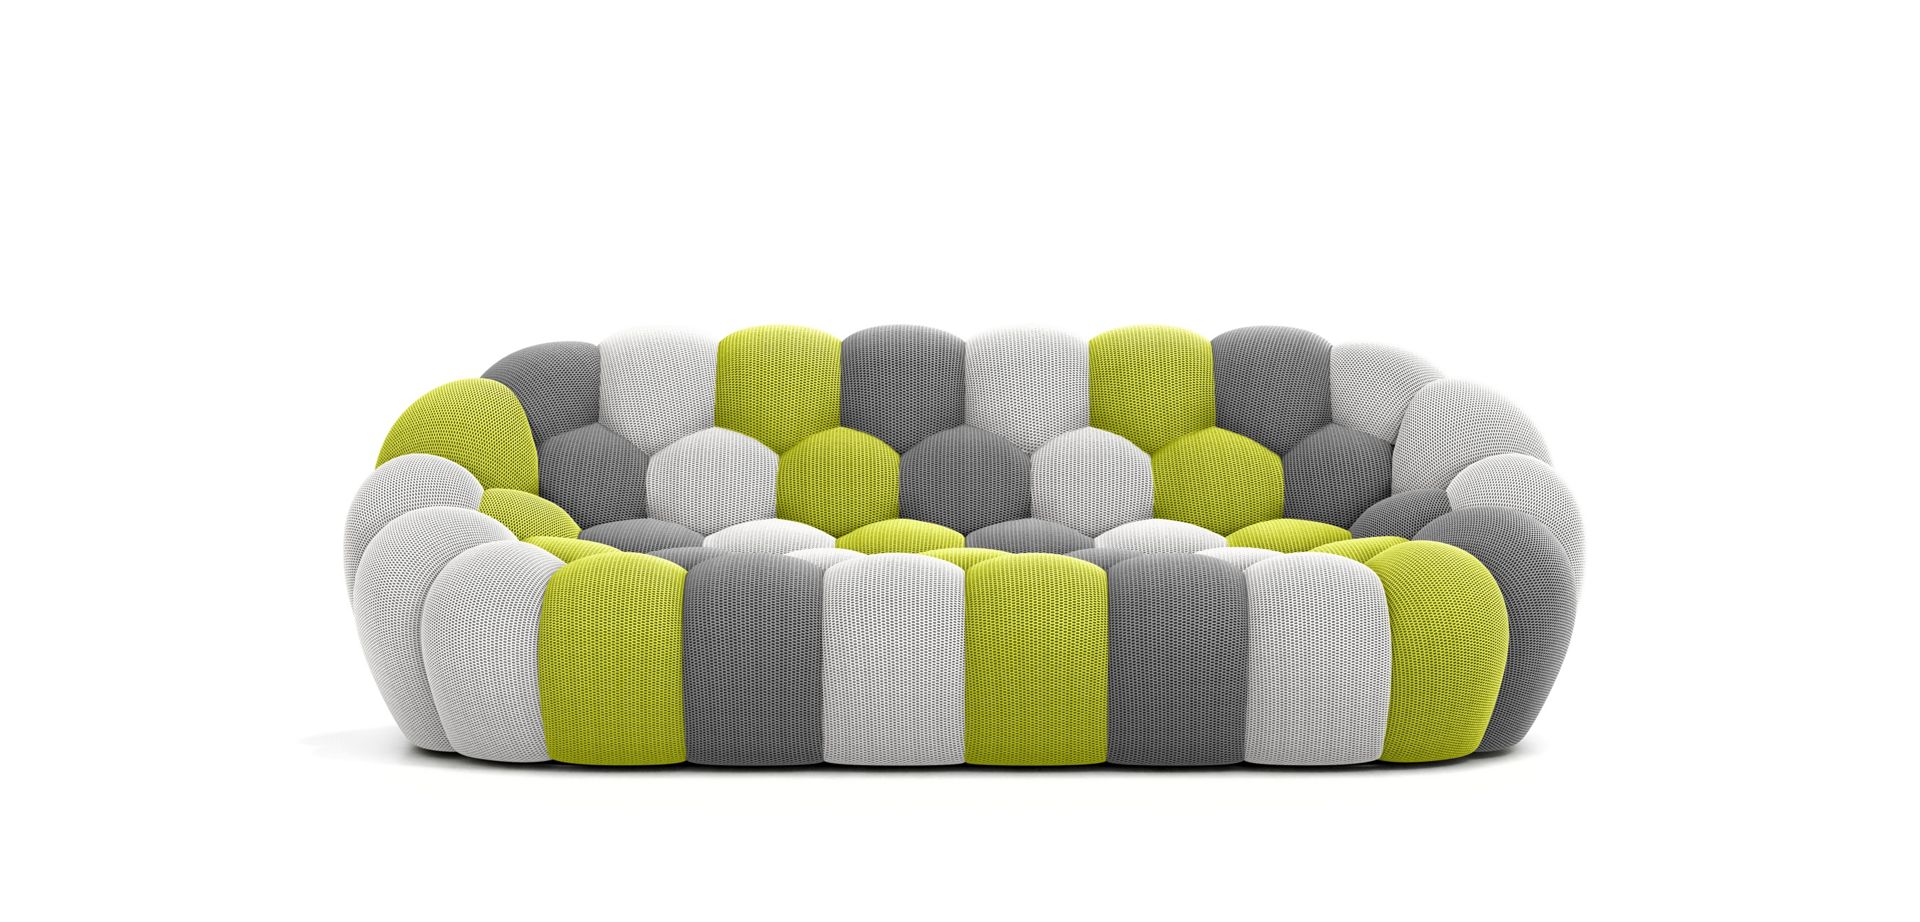 gran sofá 3 plazas - techno 3D image number 6